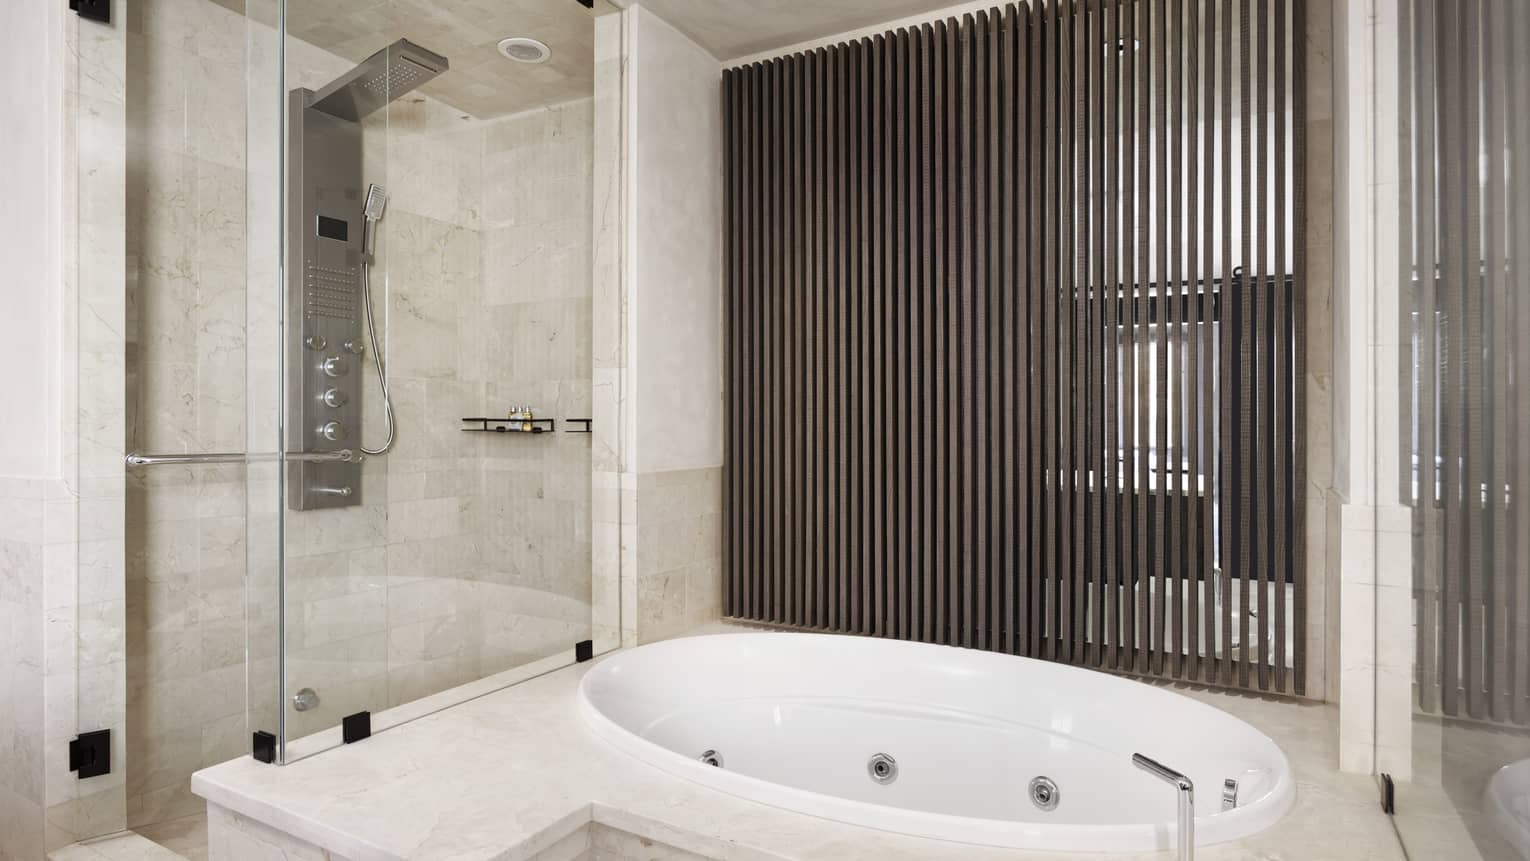 Sunken bath tub and adjacent walk-in shower with jets